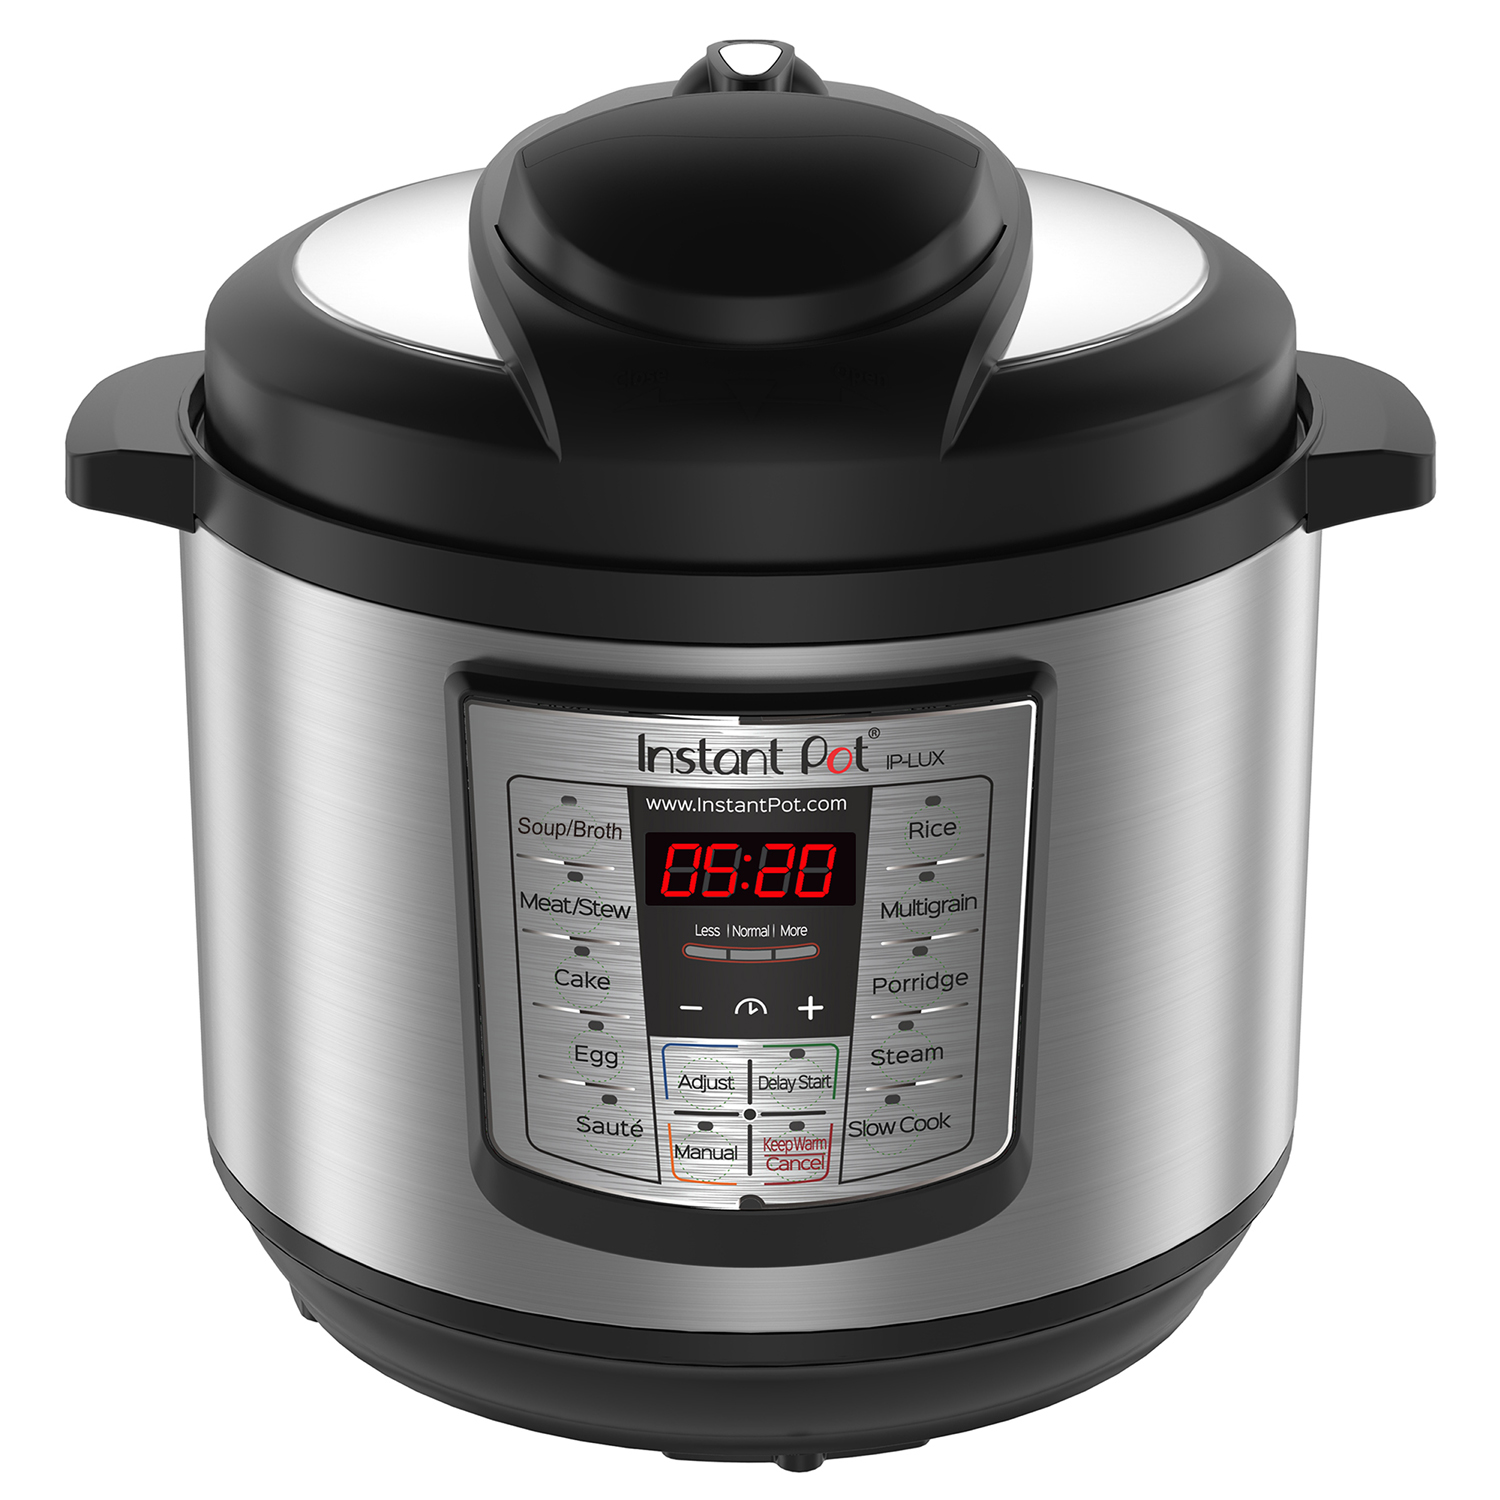 Walmart deal: Get the Instant Pot Ace 60 Cooking Blender on sale now